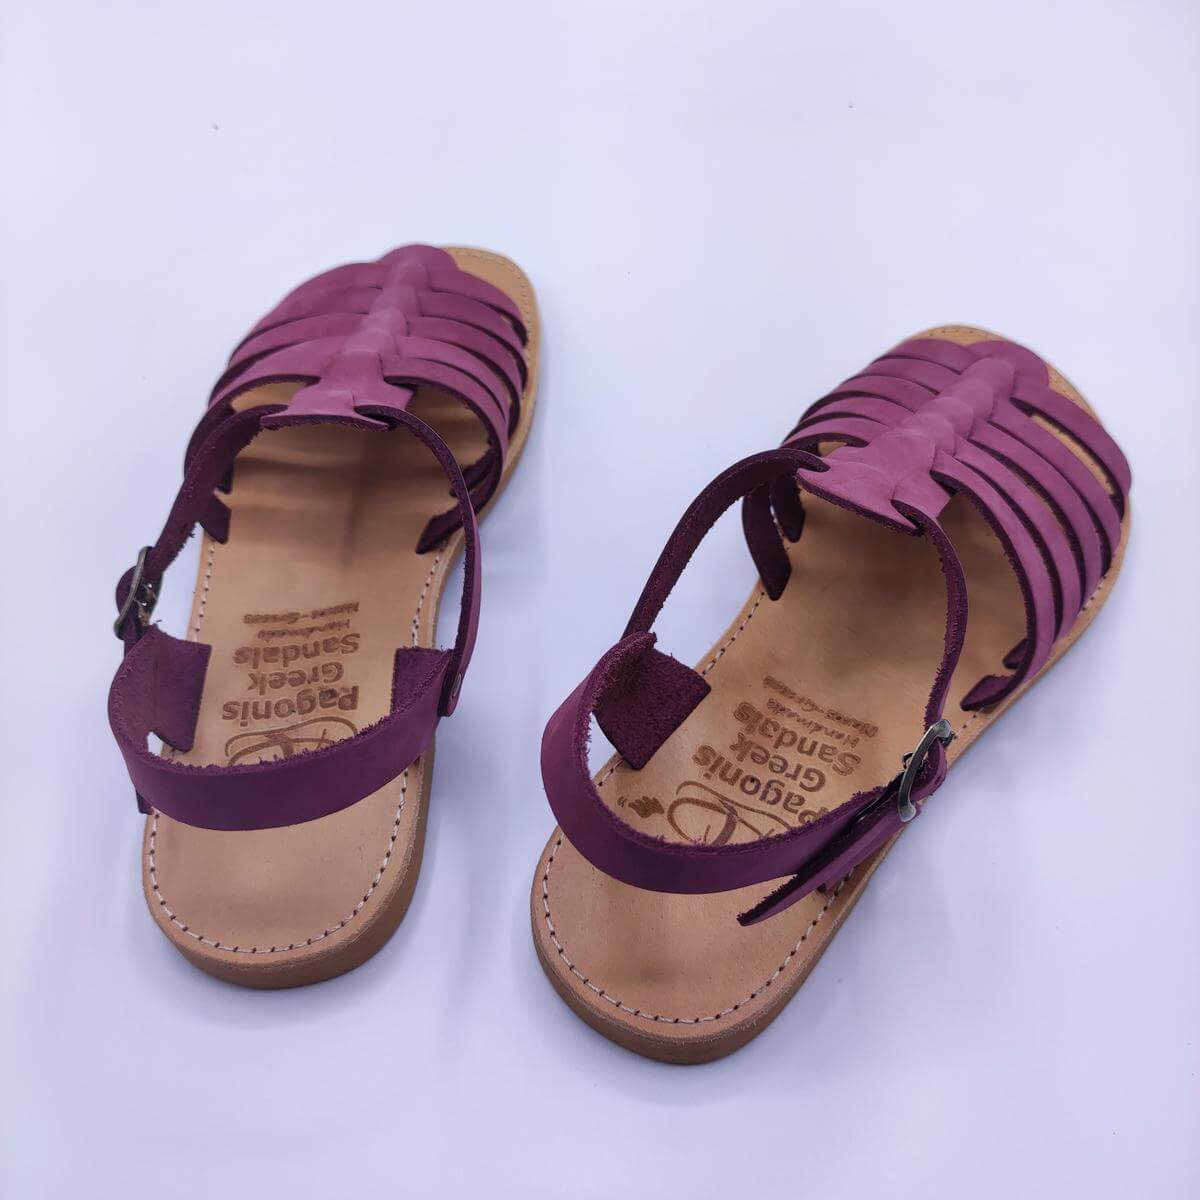 Women Strappy Gladiator Sandals Flats Purple